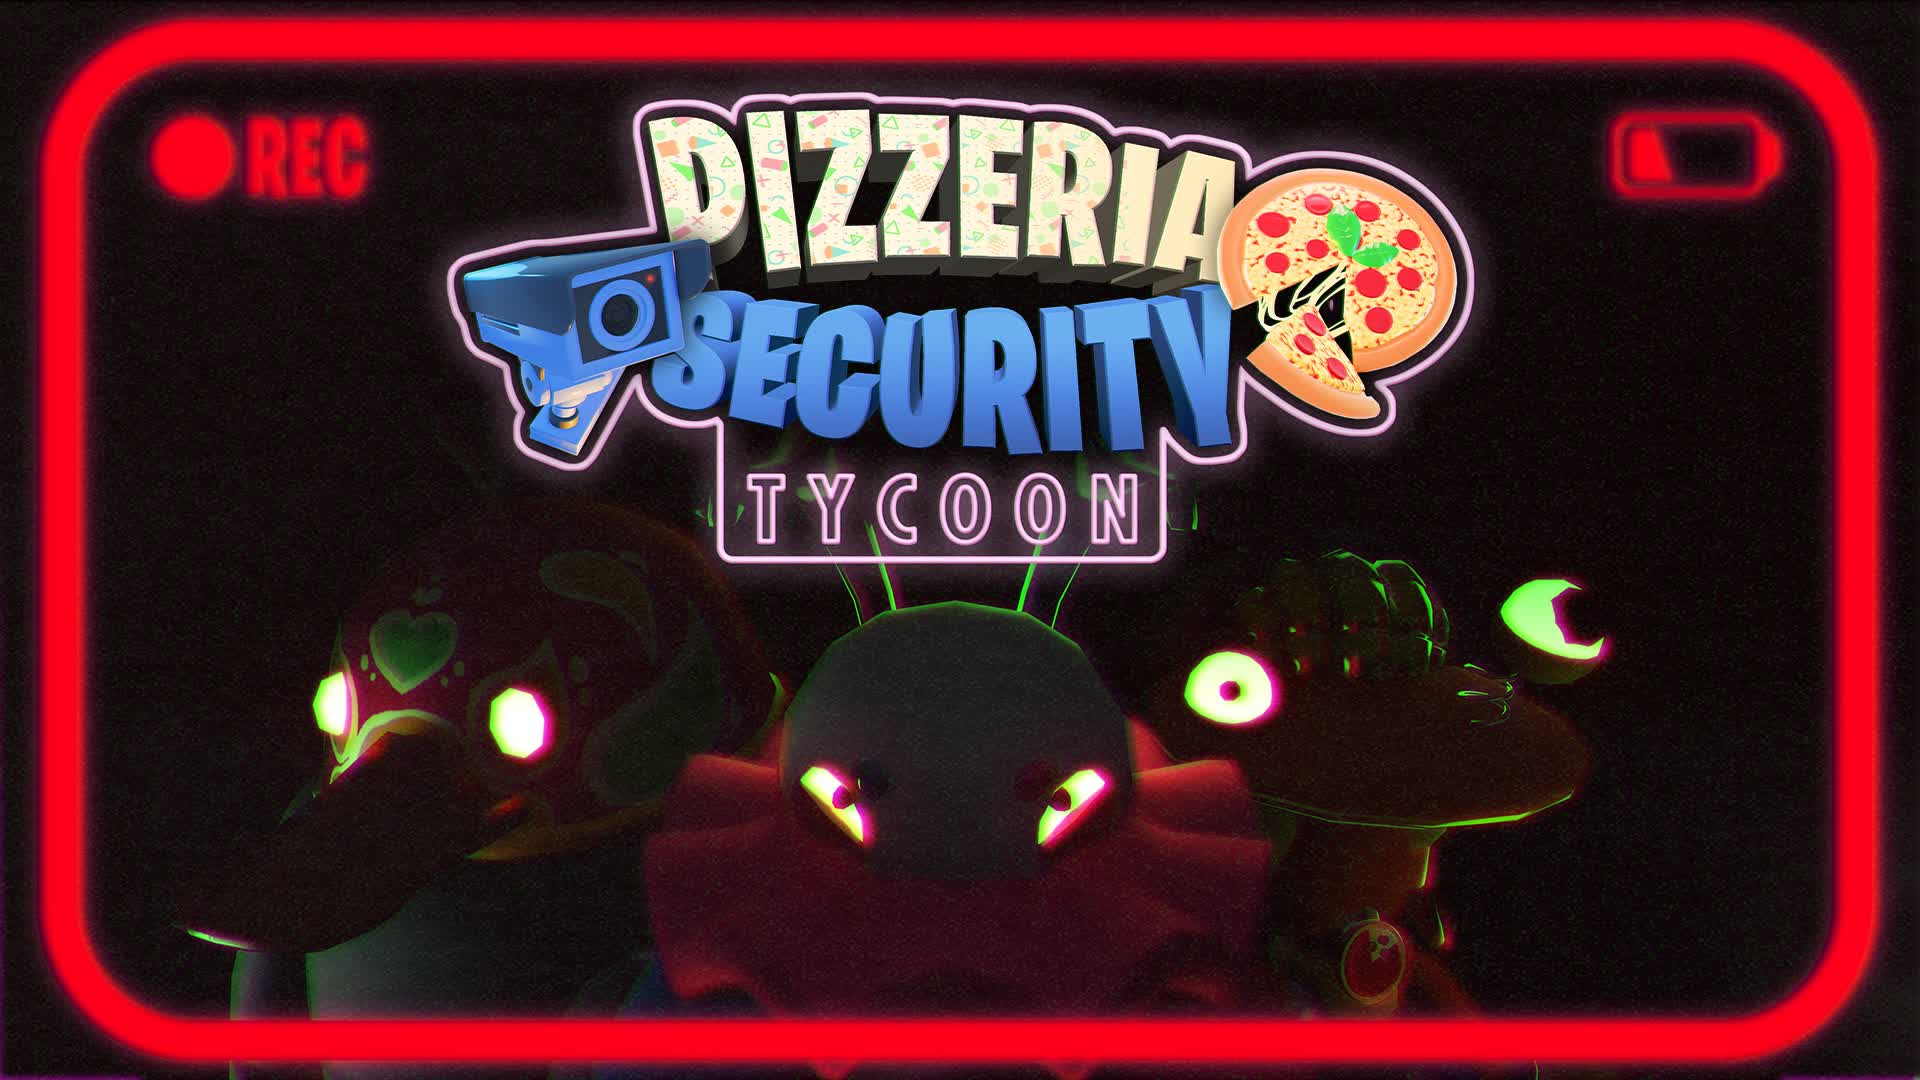 【注目の島】PIZZERIA SECURITY TYCOON